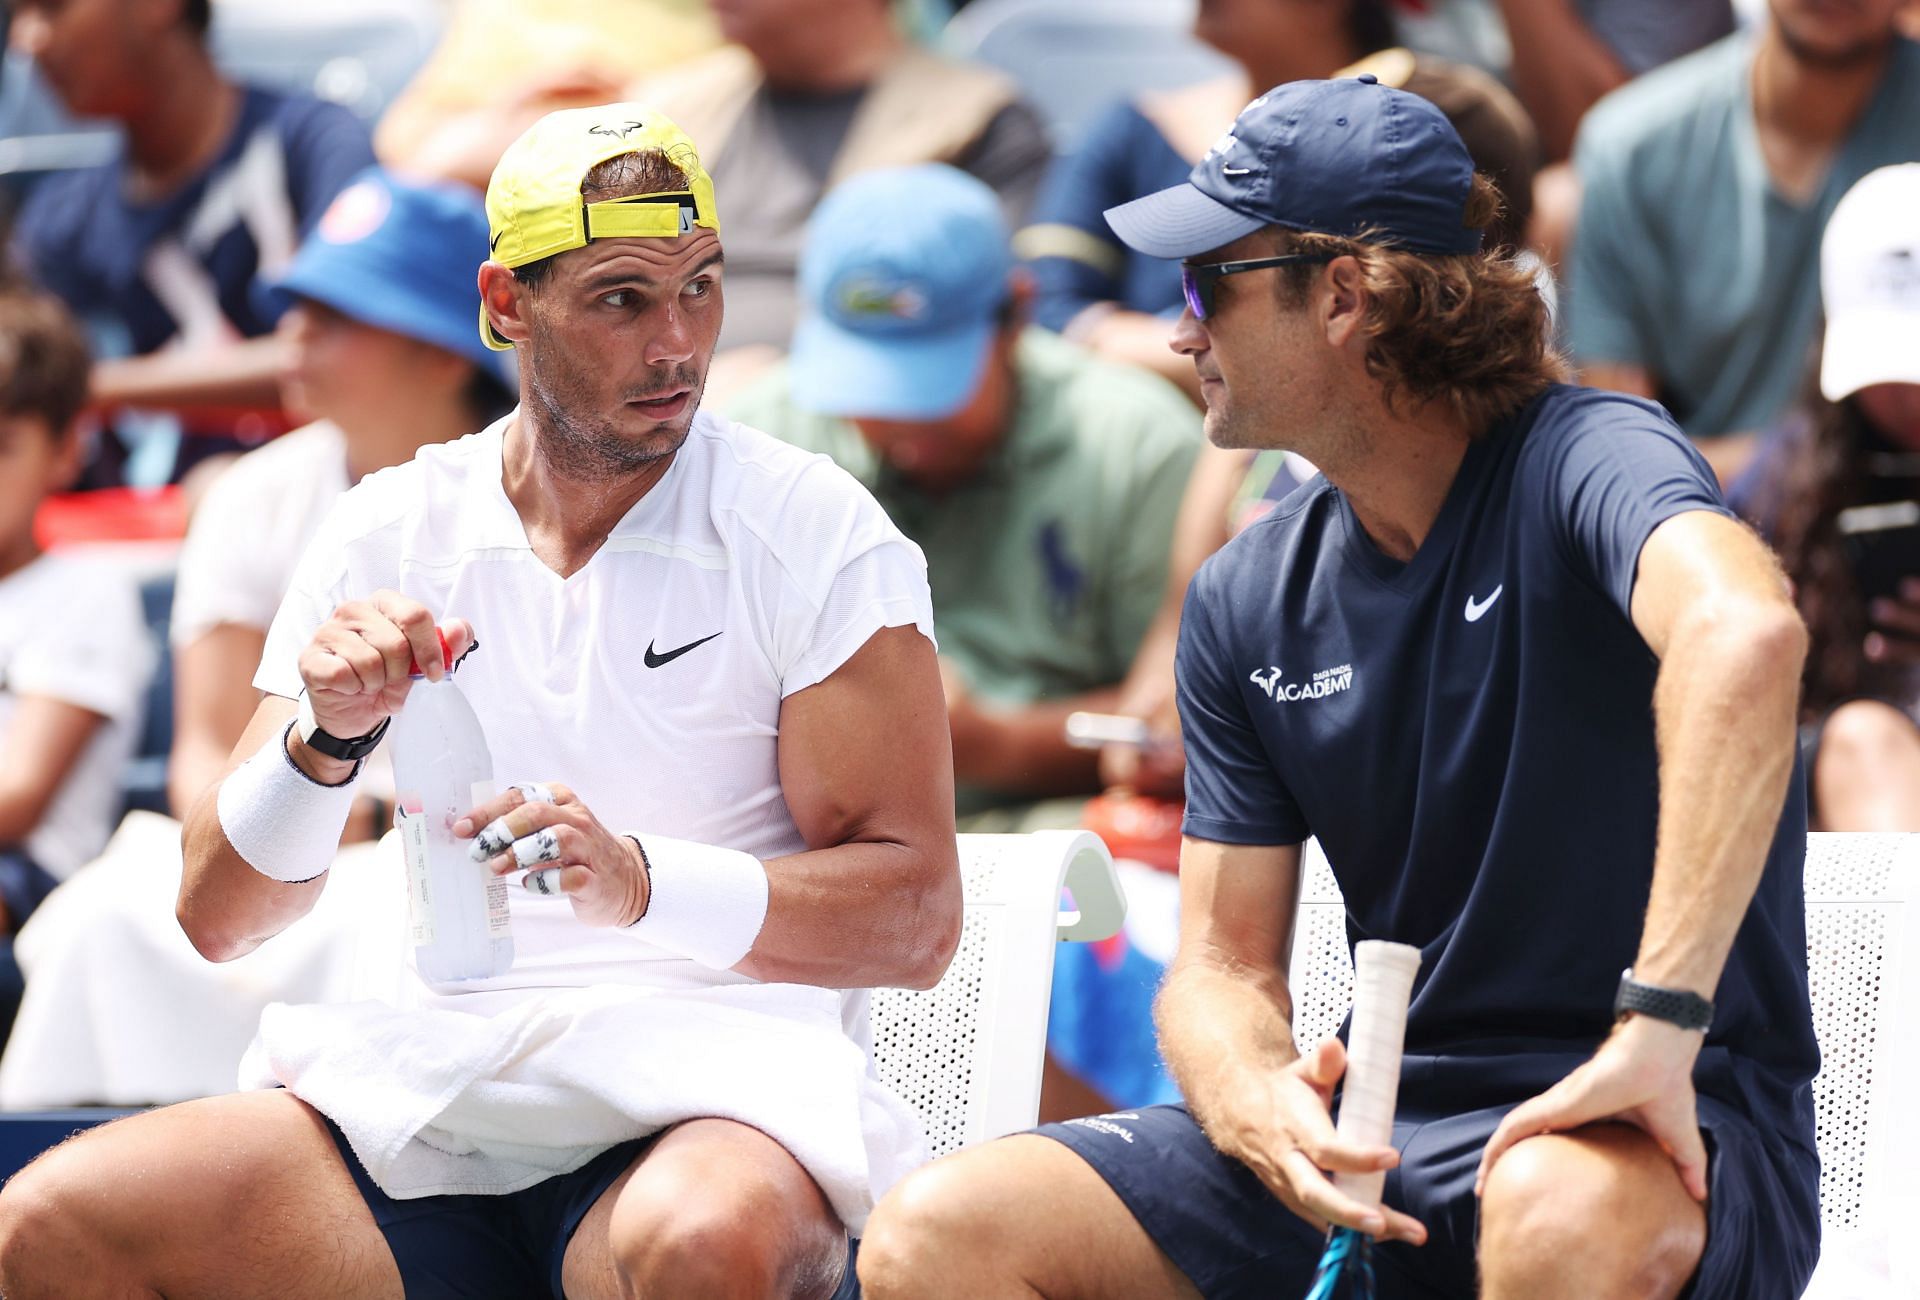 Rafael Nadal and Carlos Moya